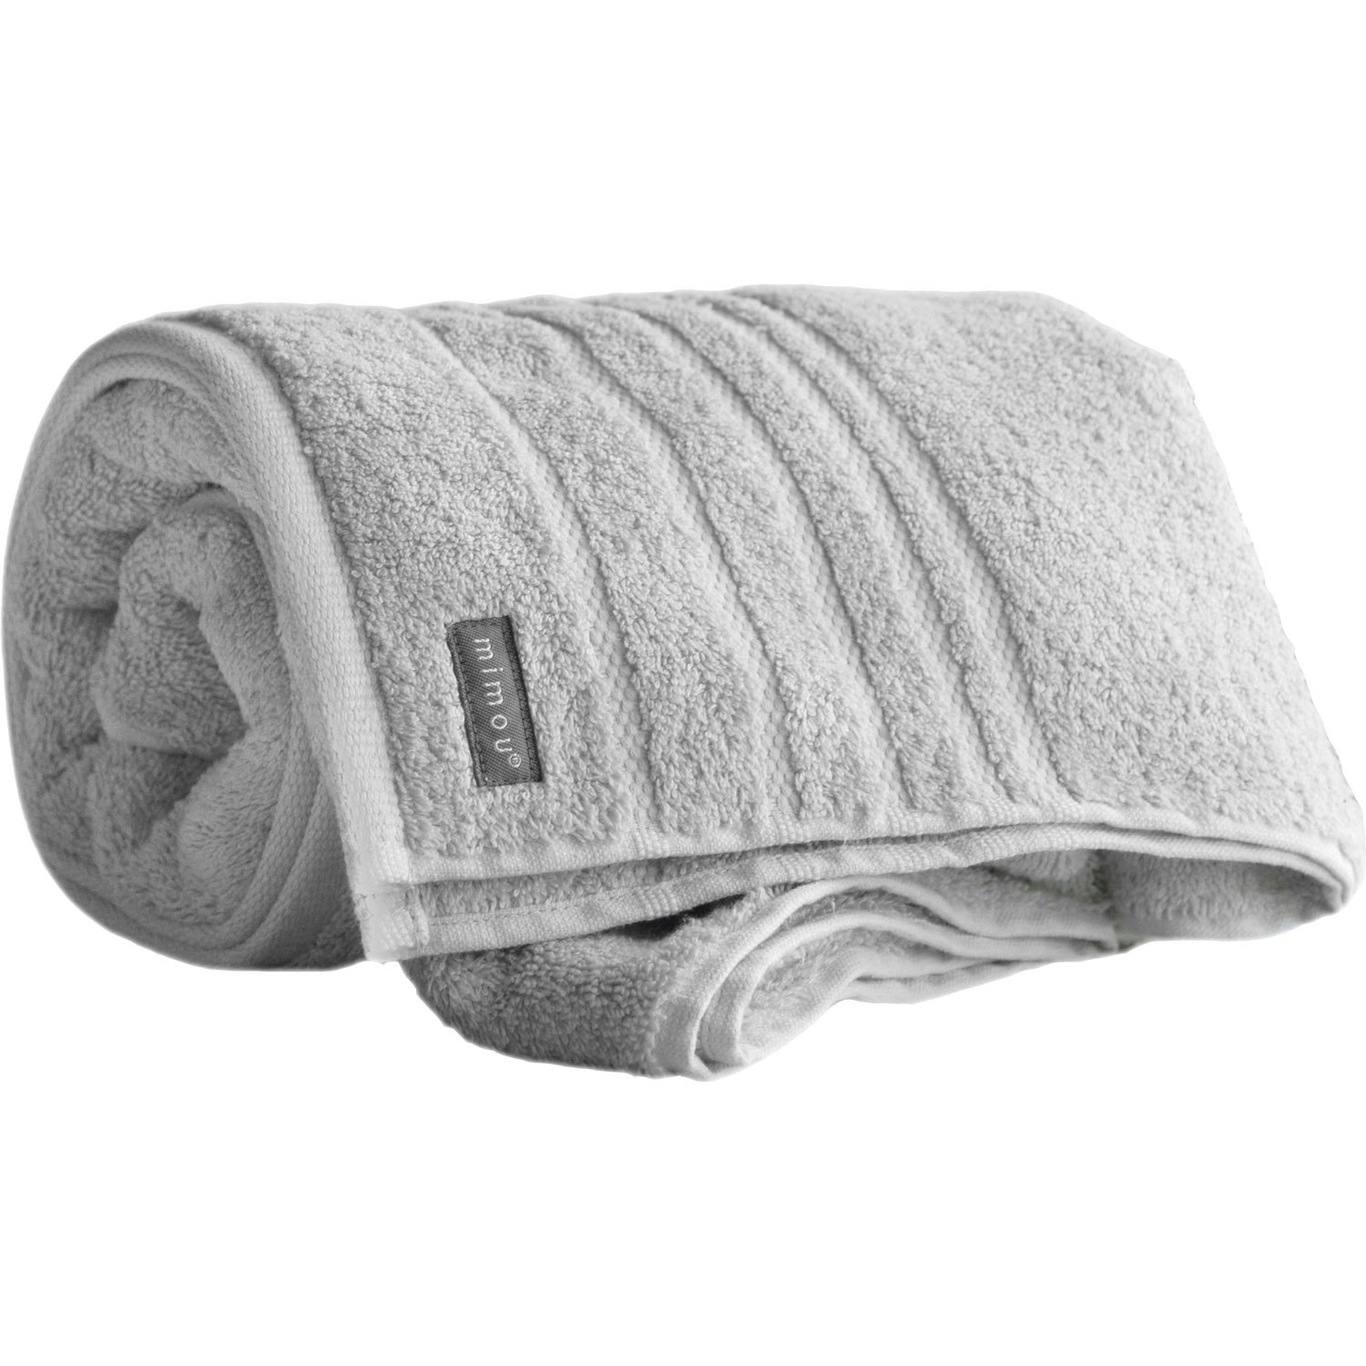 https://royaldesign.com/image/11/mimou-devon-bath-towel-70x140-cm-5?w=800&quality=80